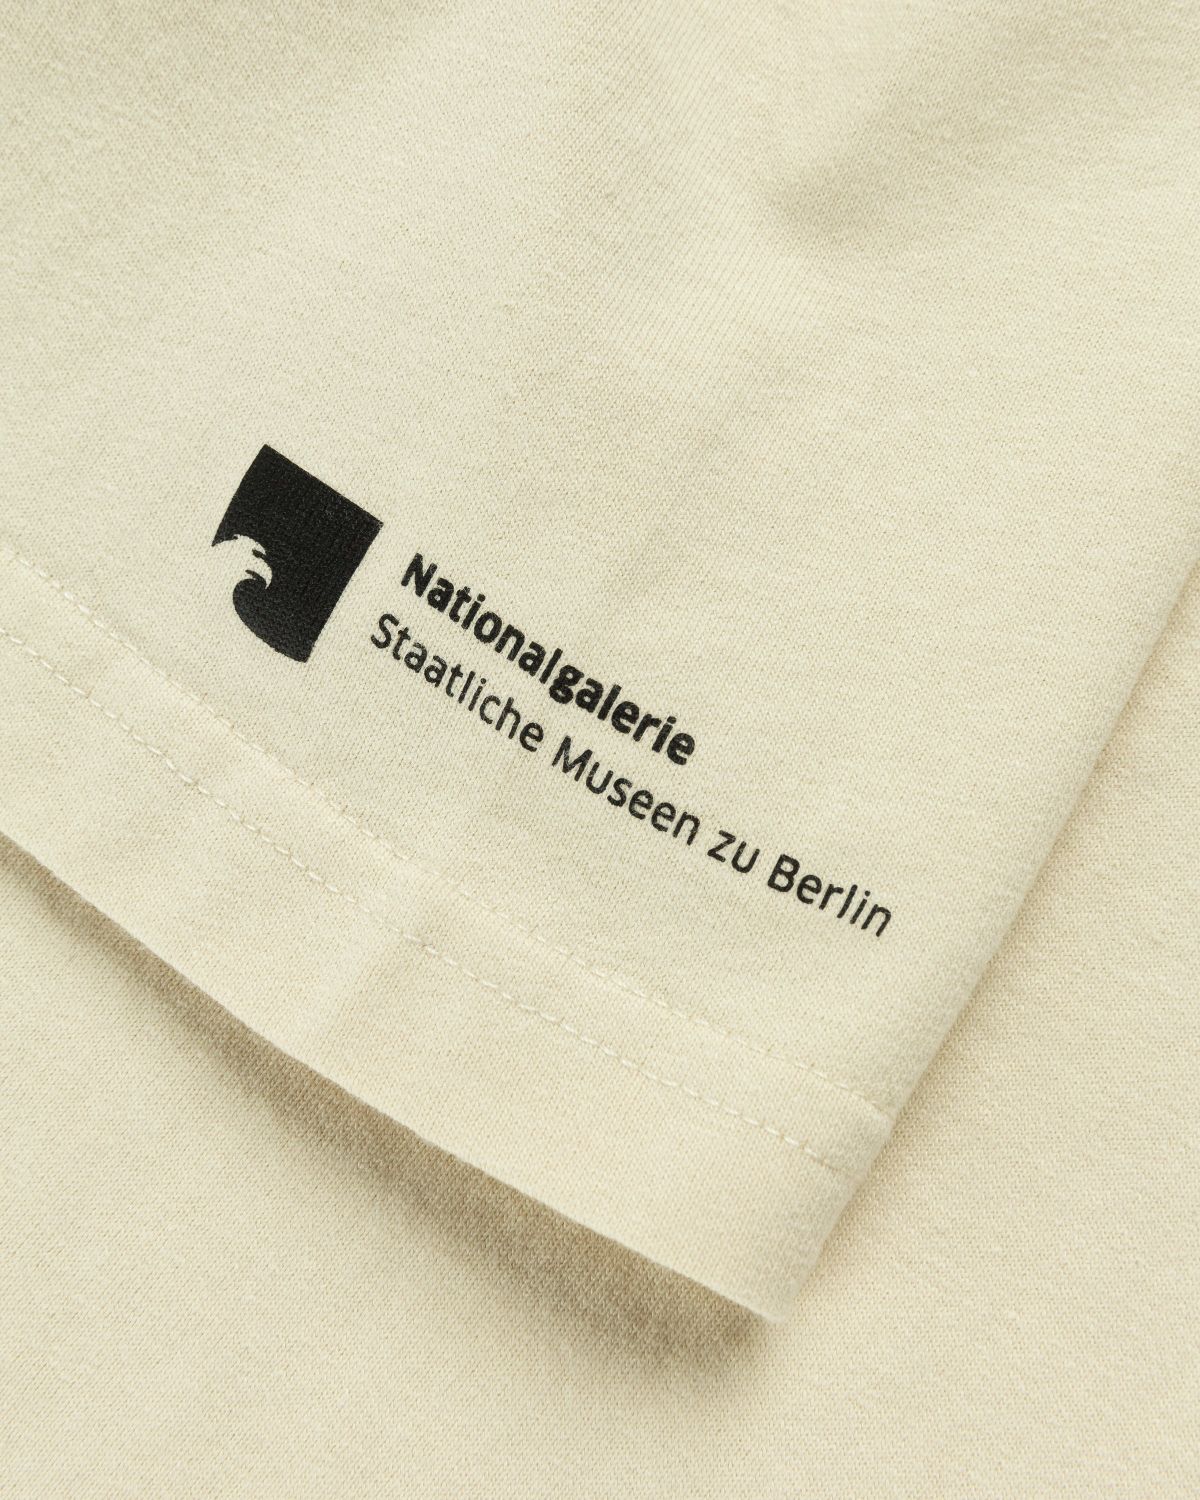 Highsnobiety – Milano Design Week Graphic T-Shirt White